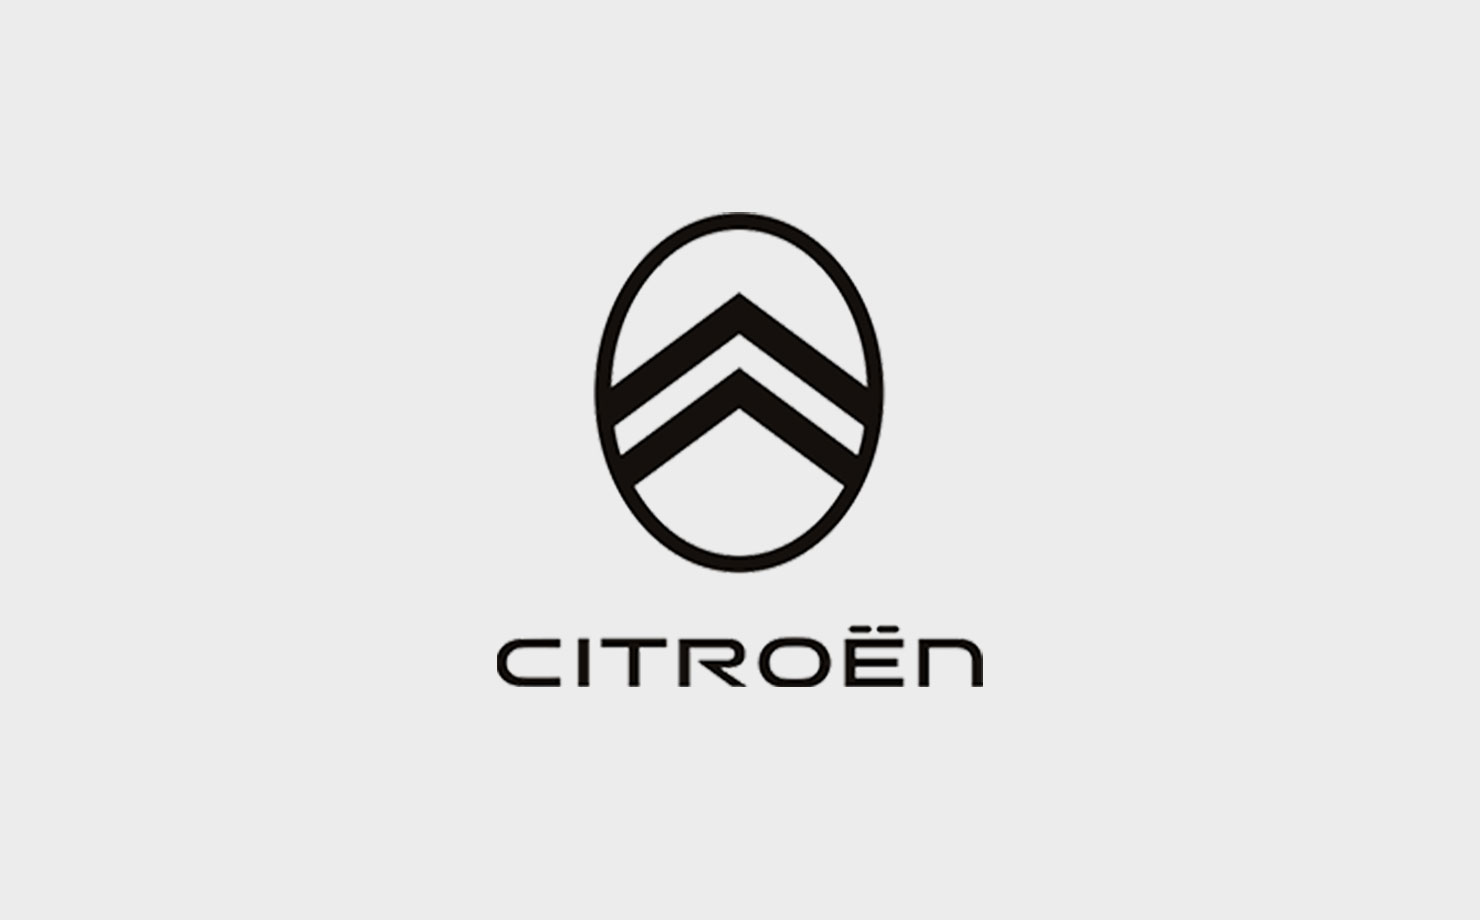 Image of Citroen logo